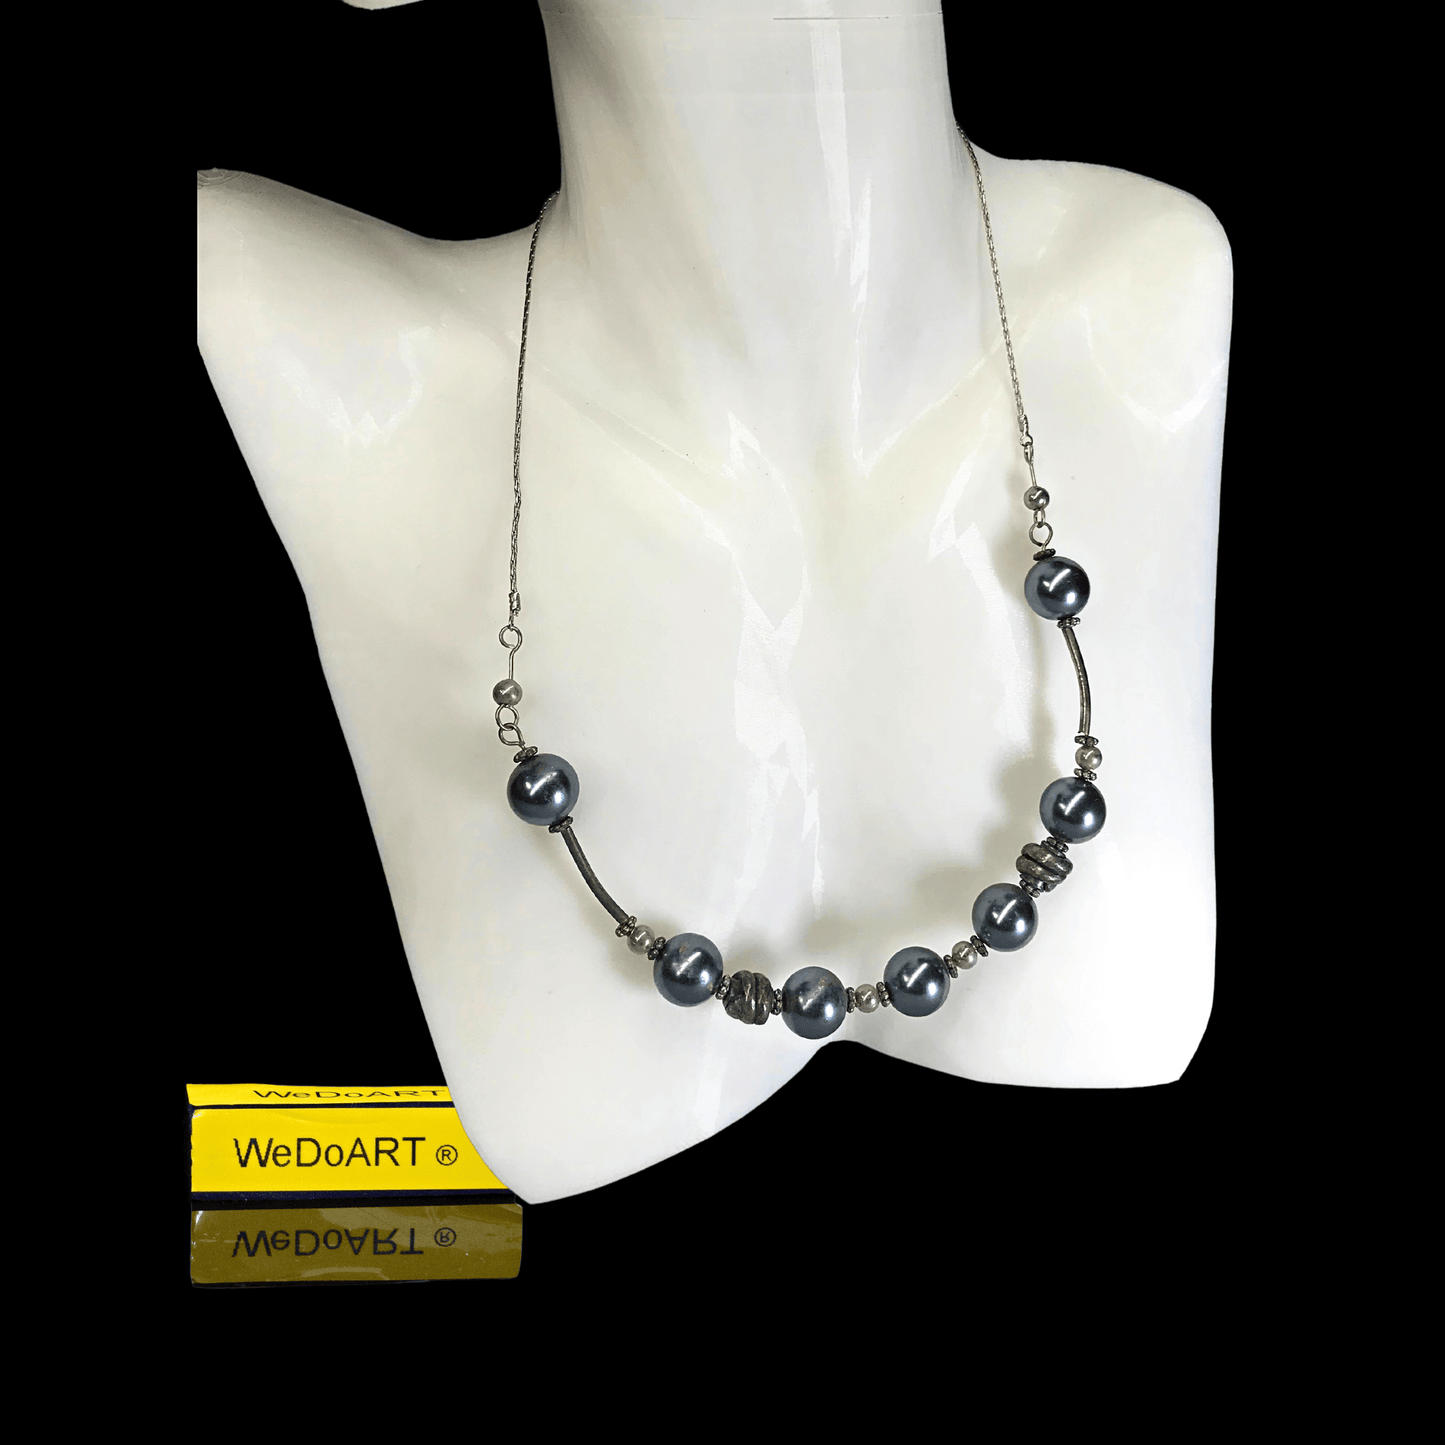 jewelry necklace and earrings set - WEDOART-IL